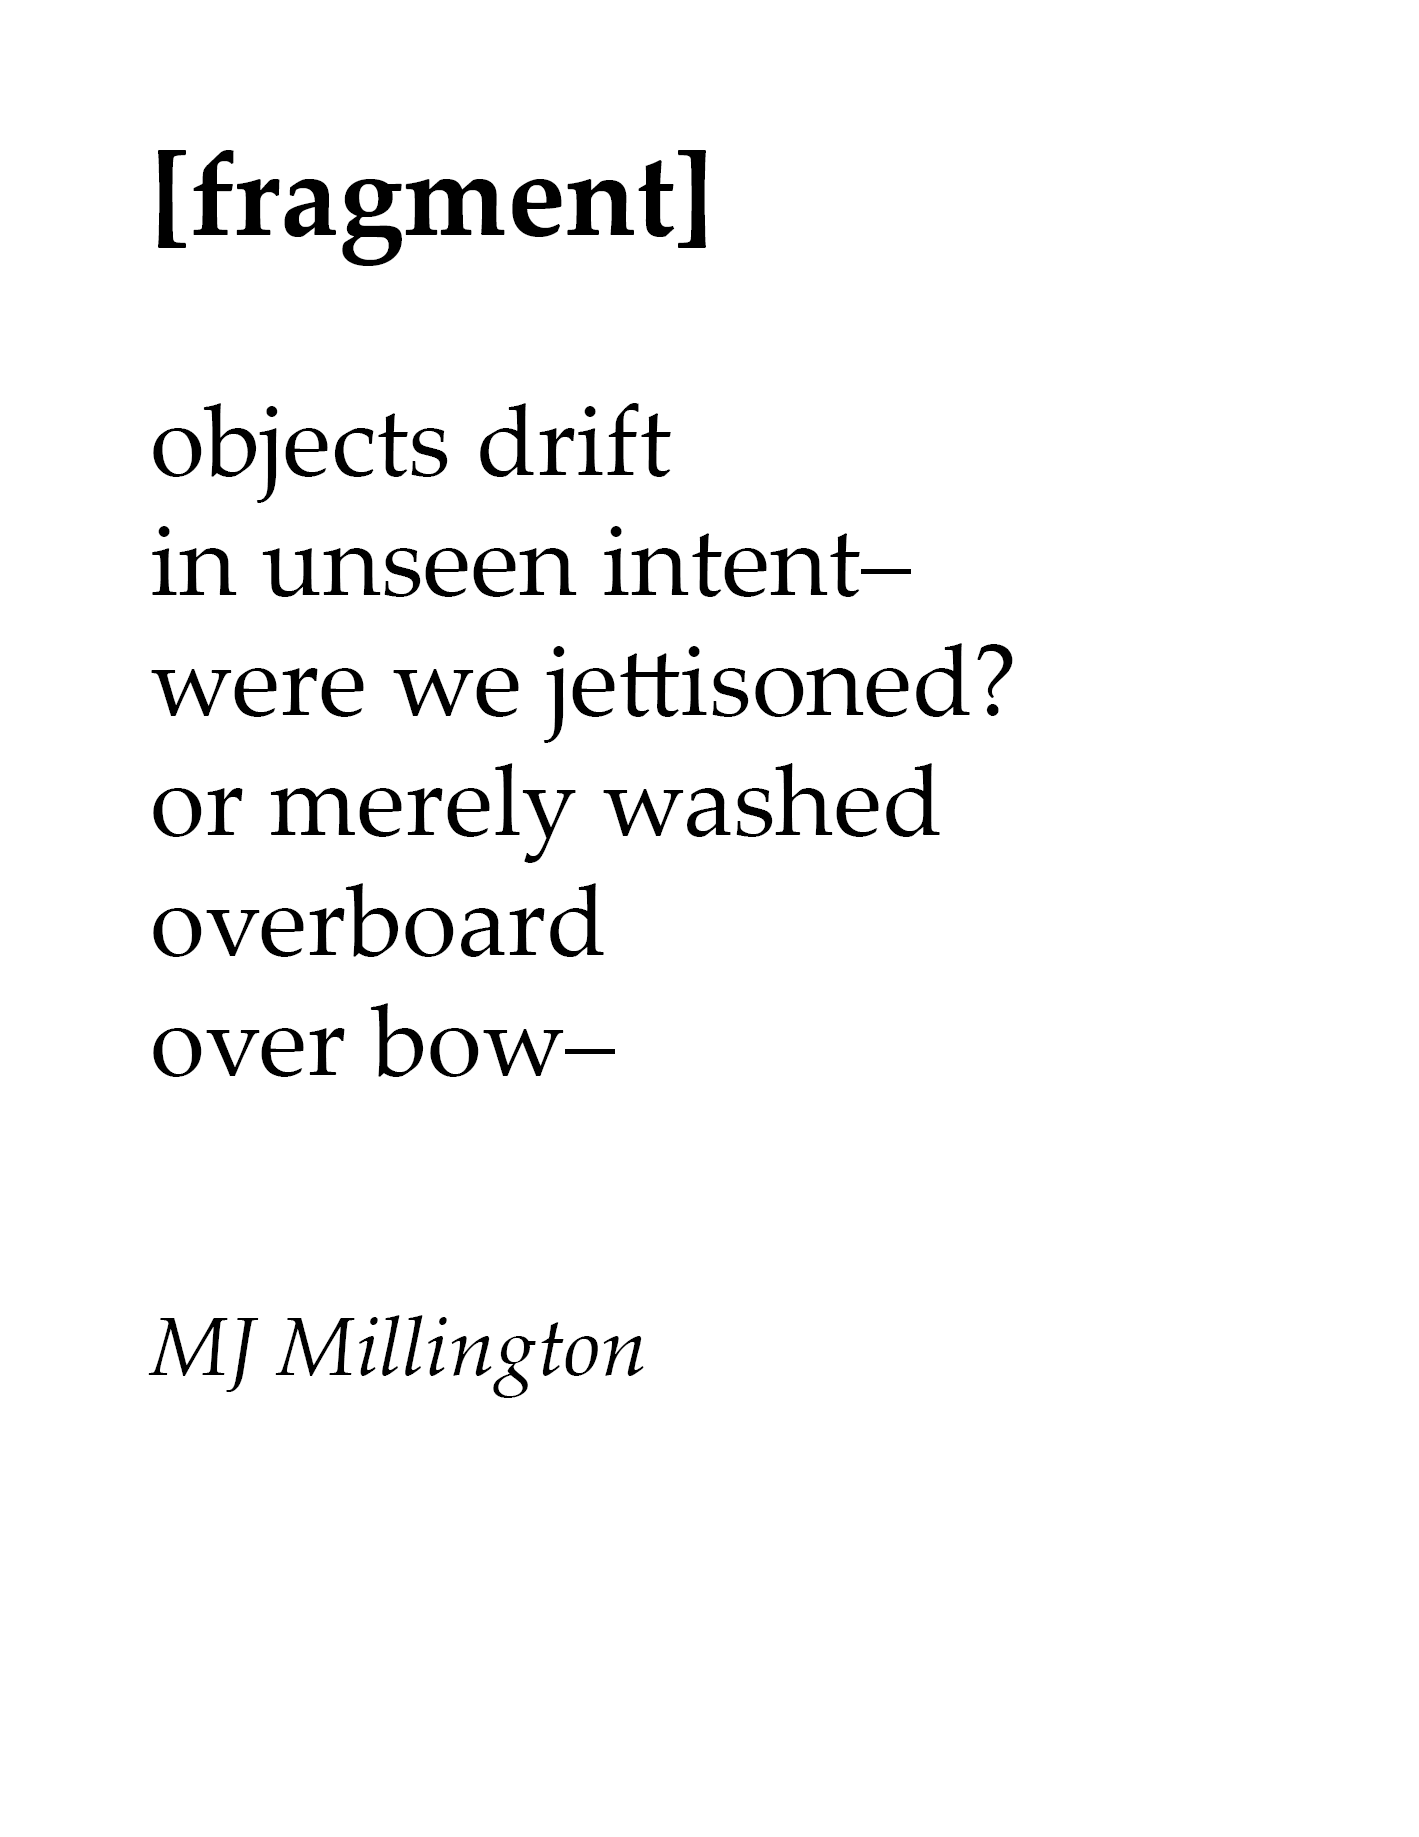 Ostrakon poem fragments9.png